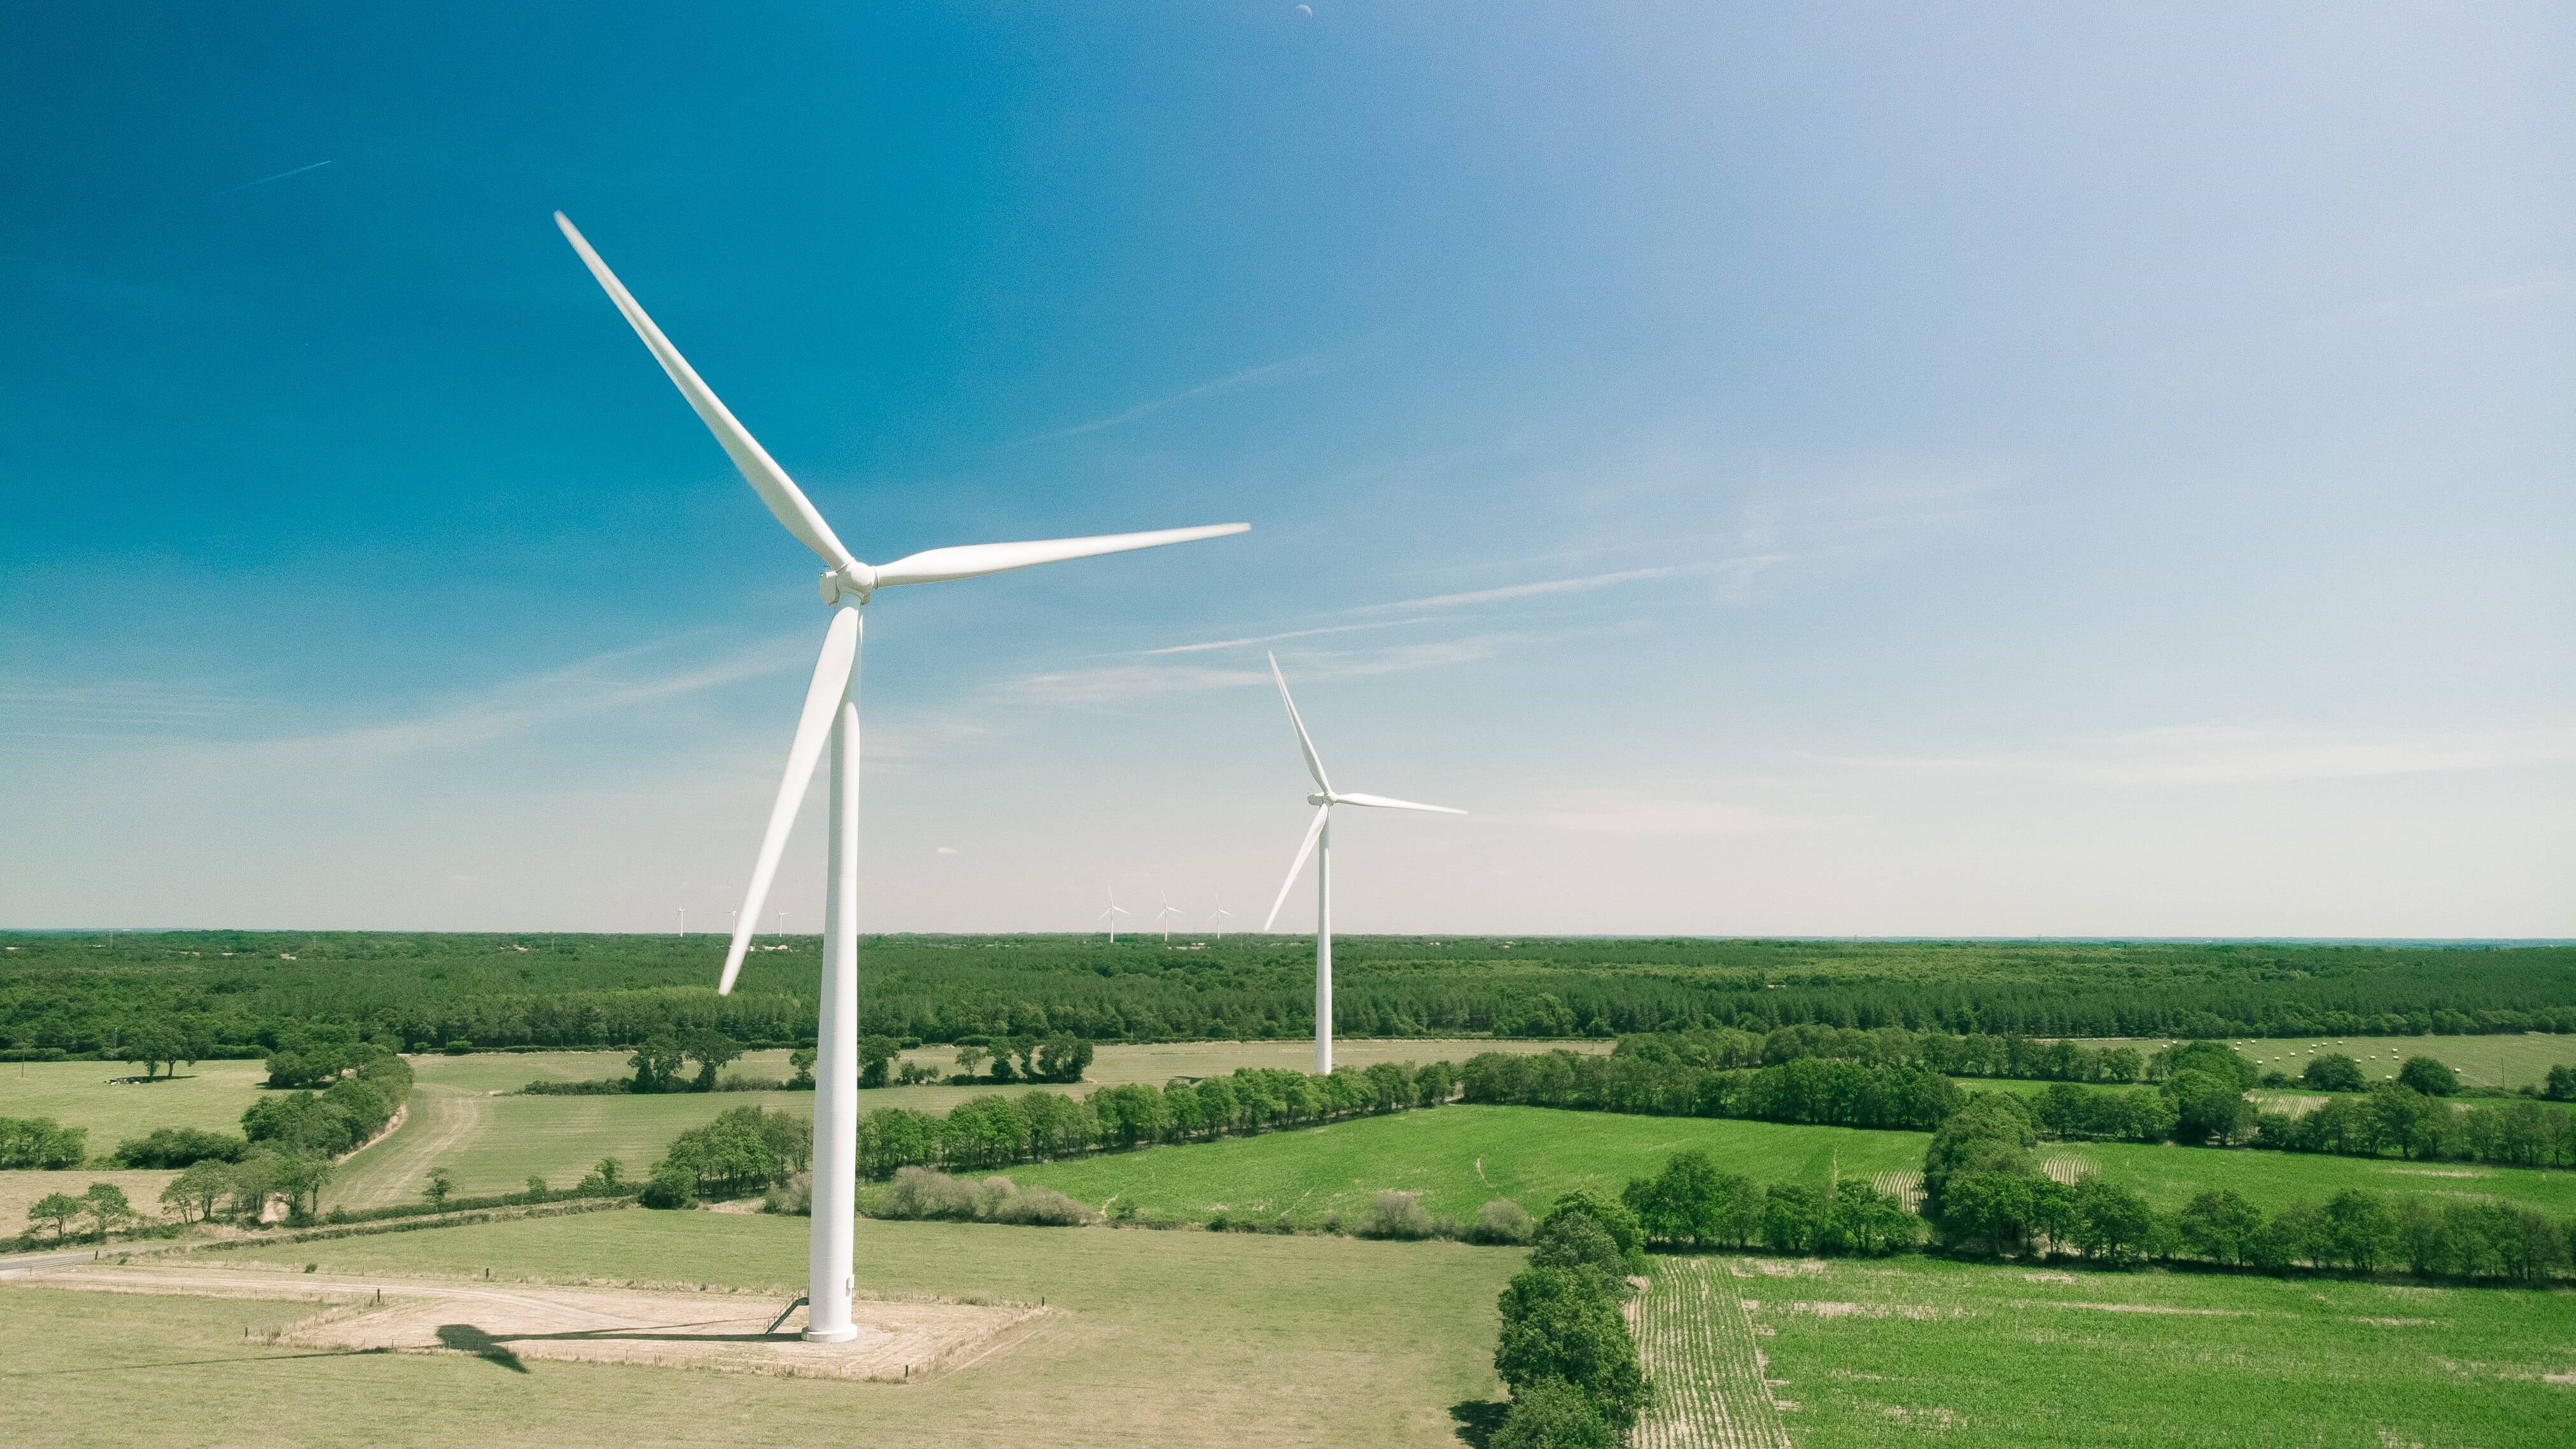 Wind turbines in countryside